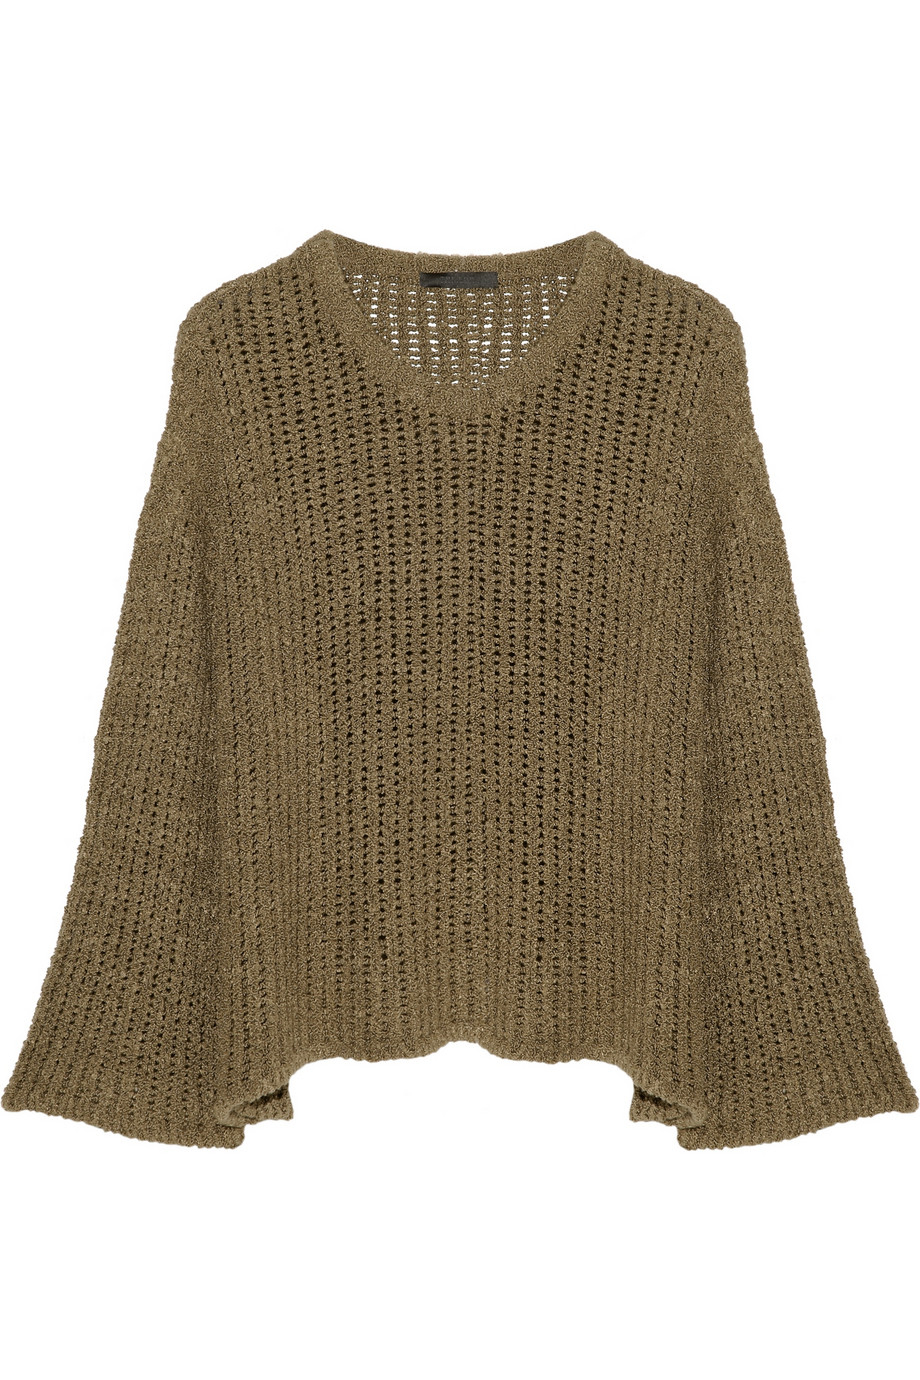 Lyst - The Row Nava Bouclé Knit Silk Sweater in Brown